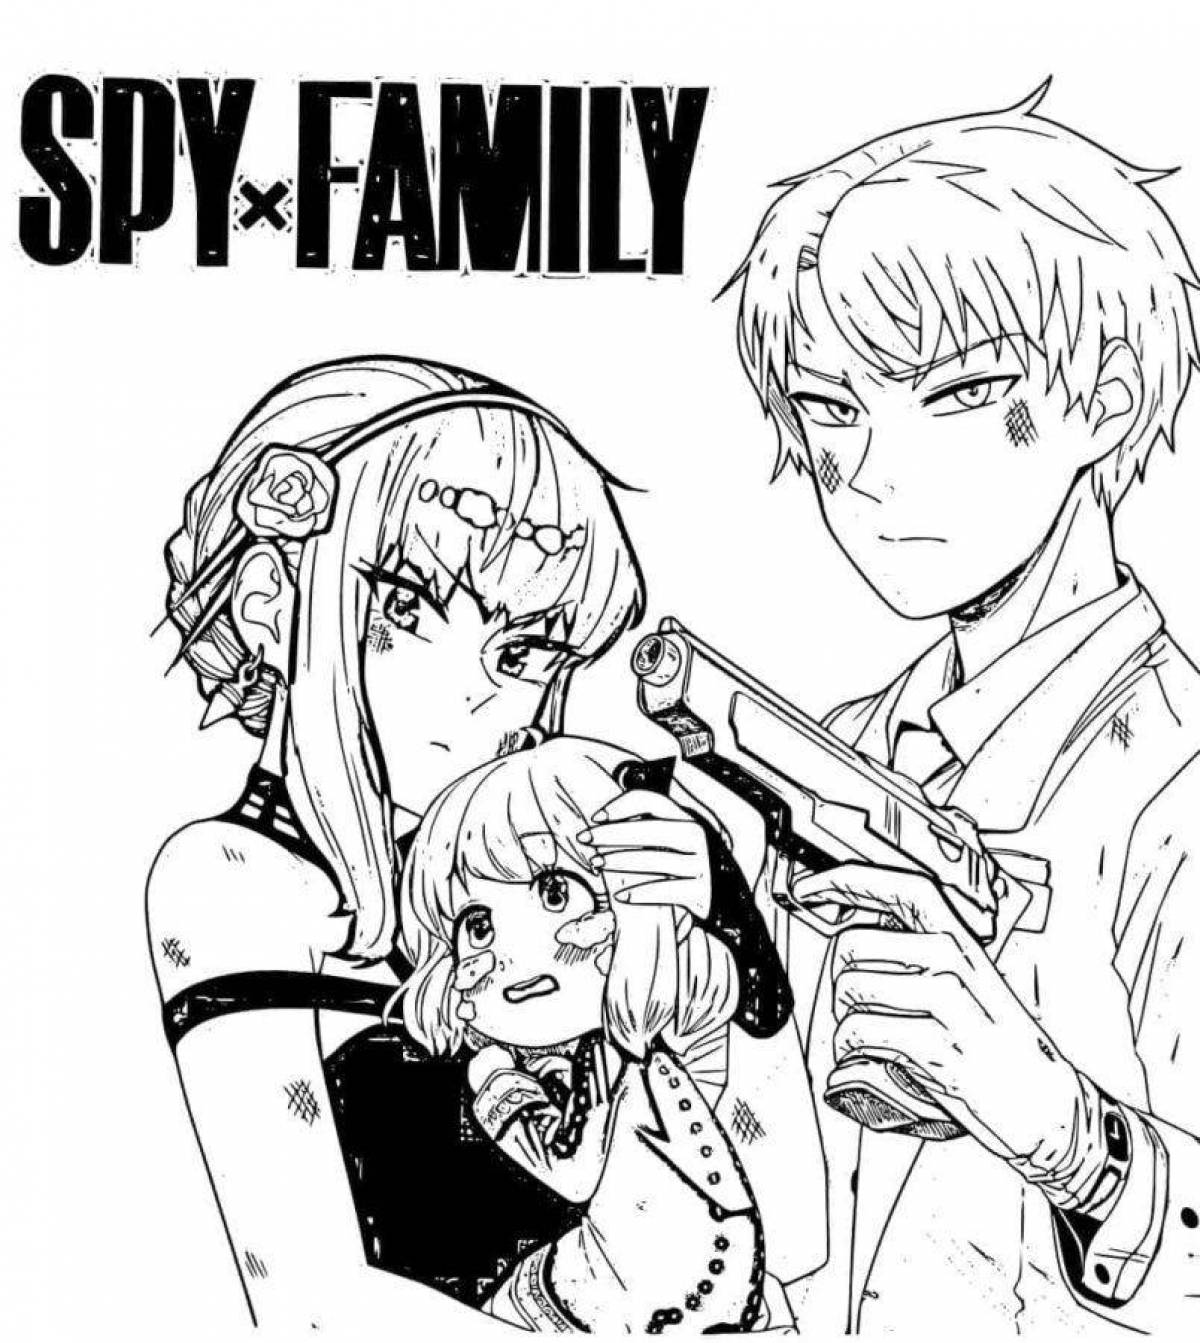 Radiant ani's spy family